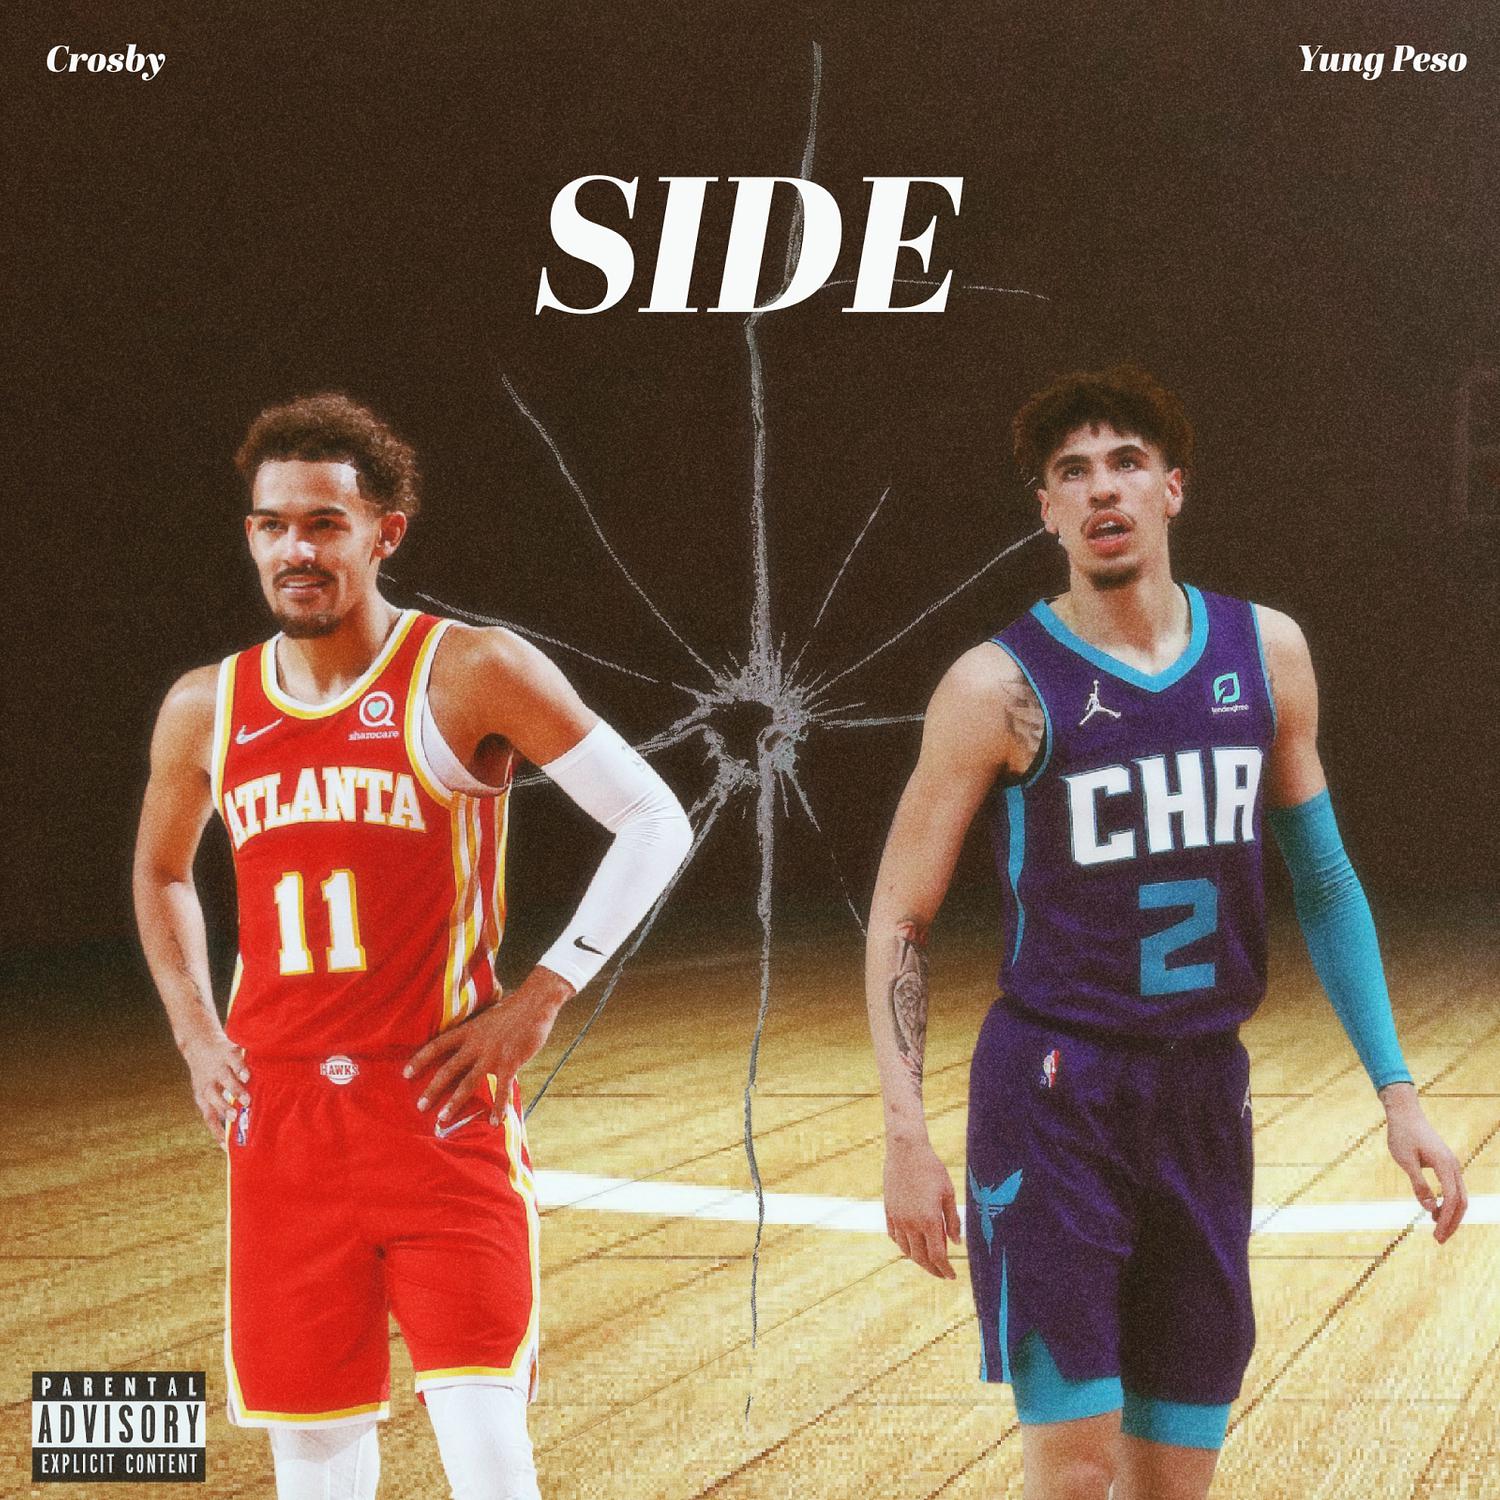 Crosby - Side